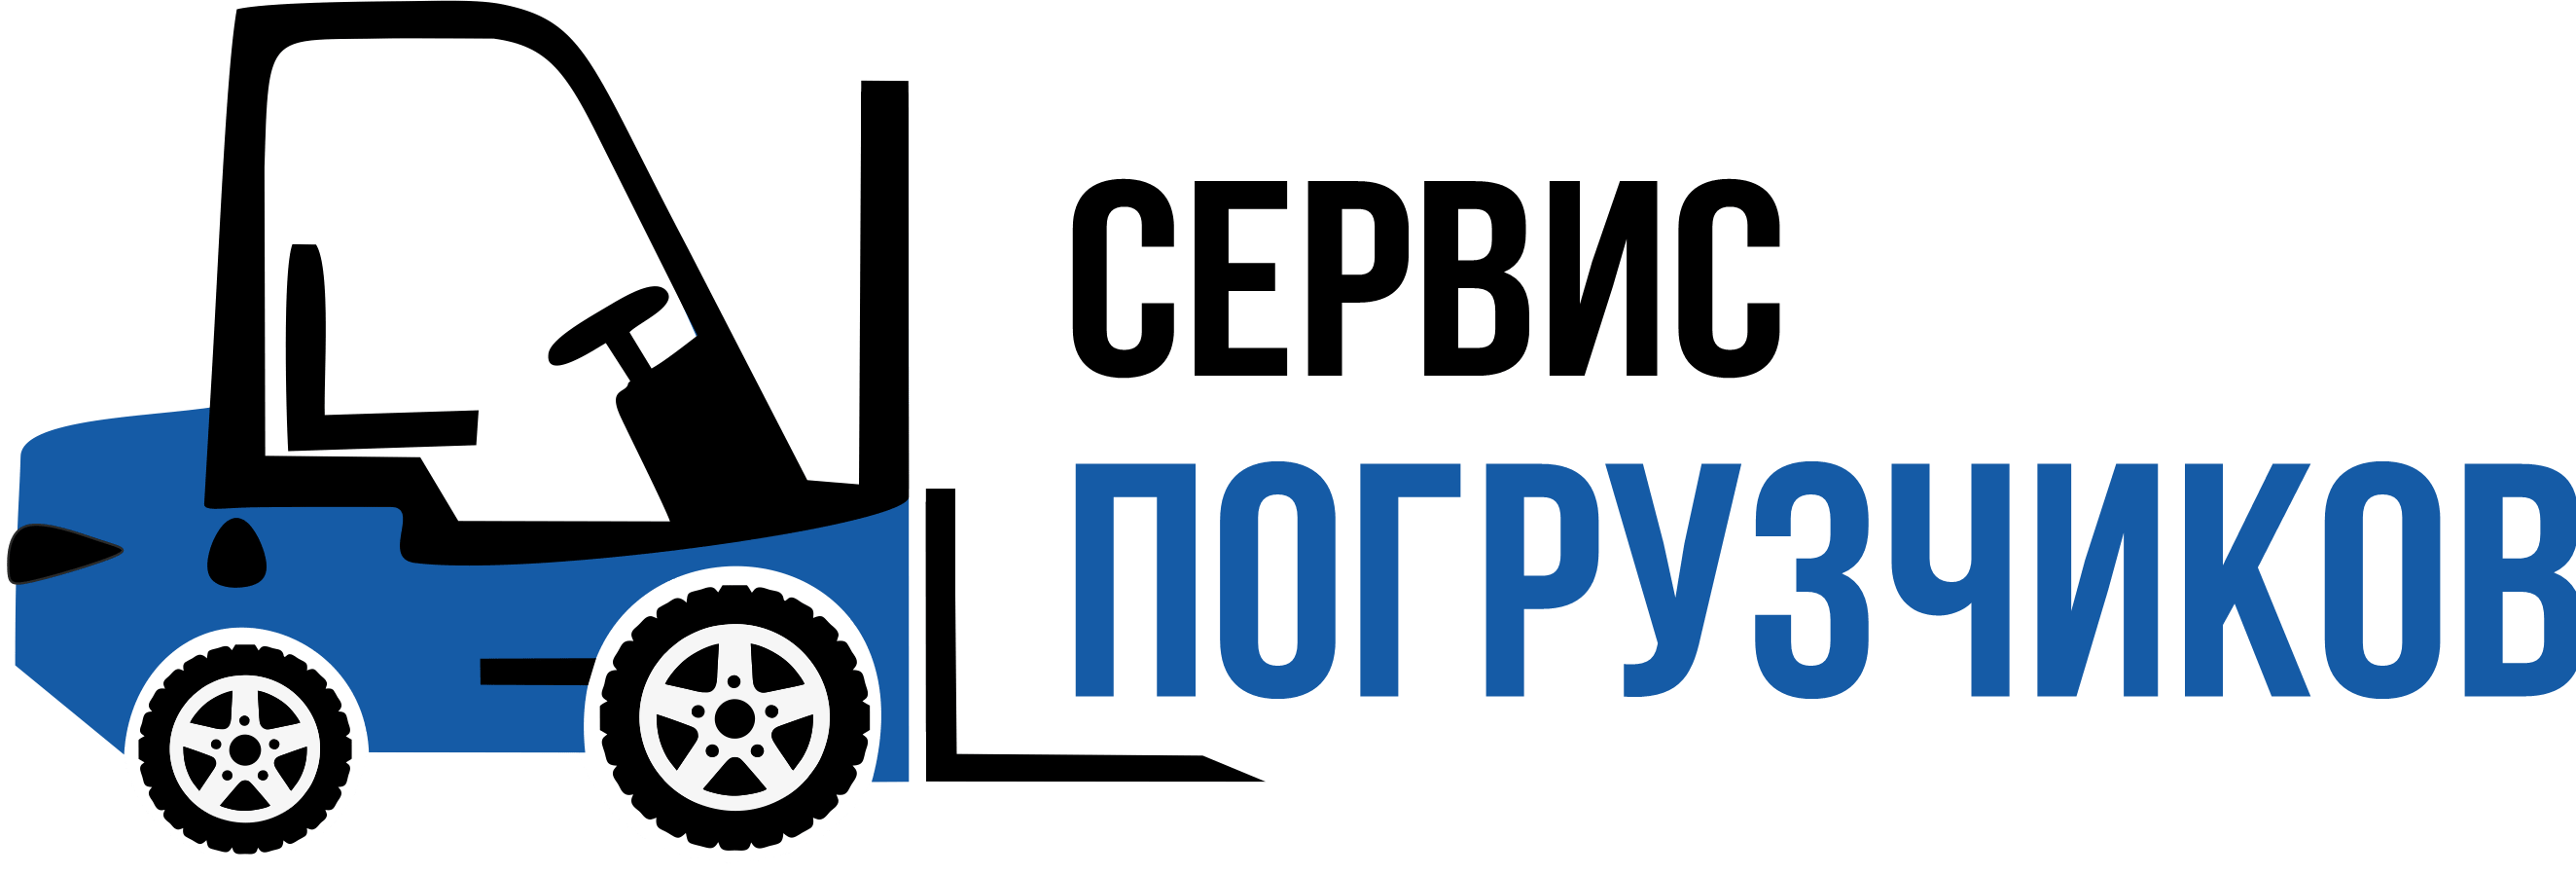 ИП Пальцев Роман Николаевич - Город Аксай logo3-min.png